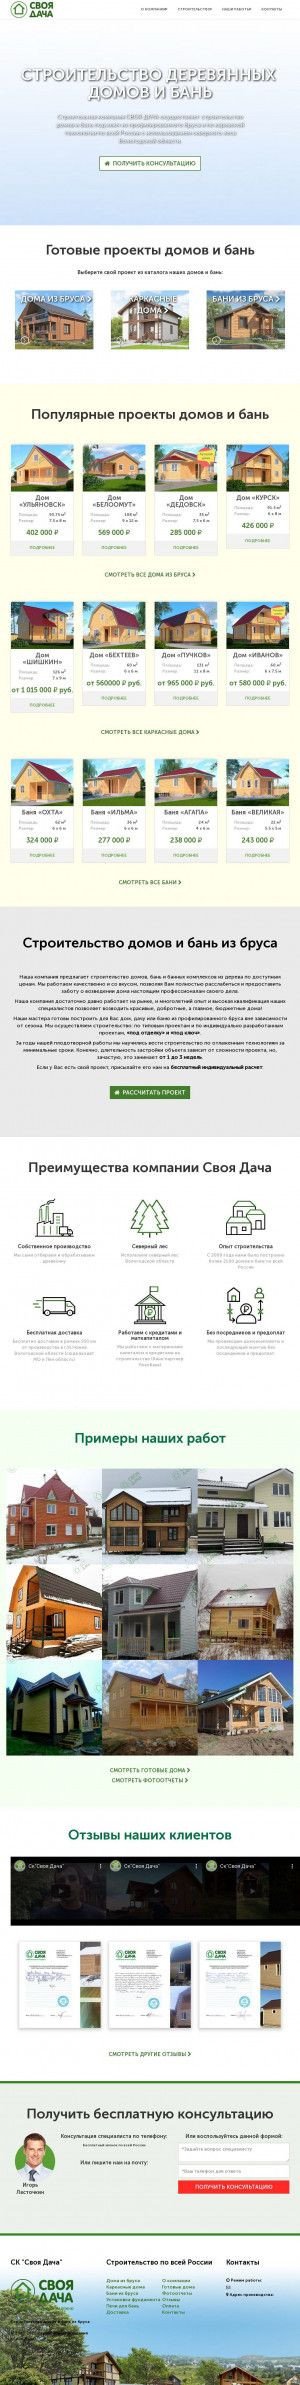 Предпросмотр для svodacha.ru — Своя Дача